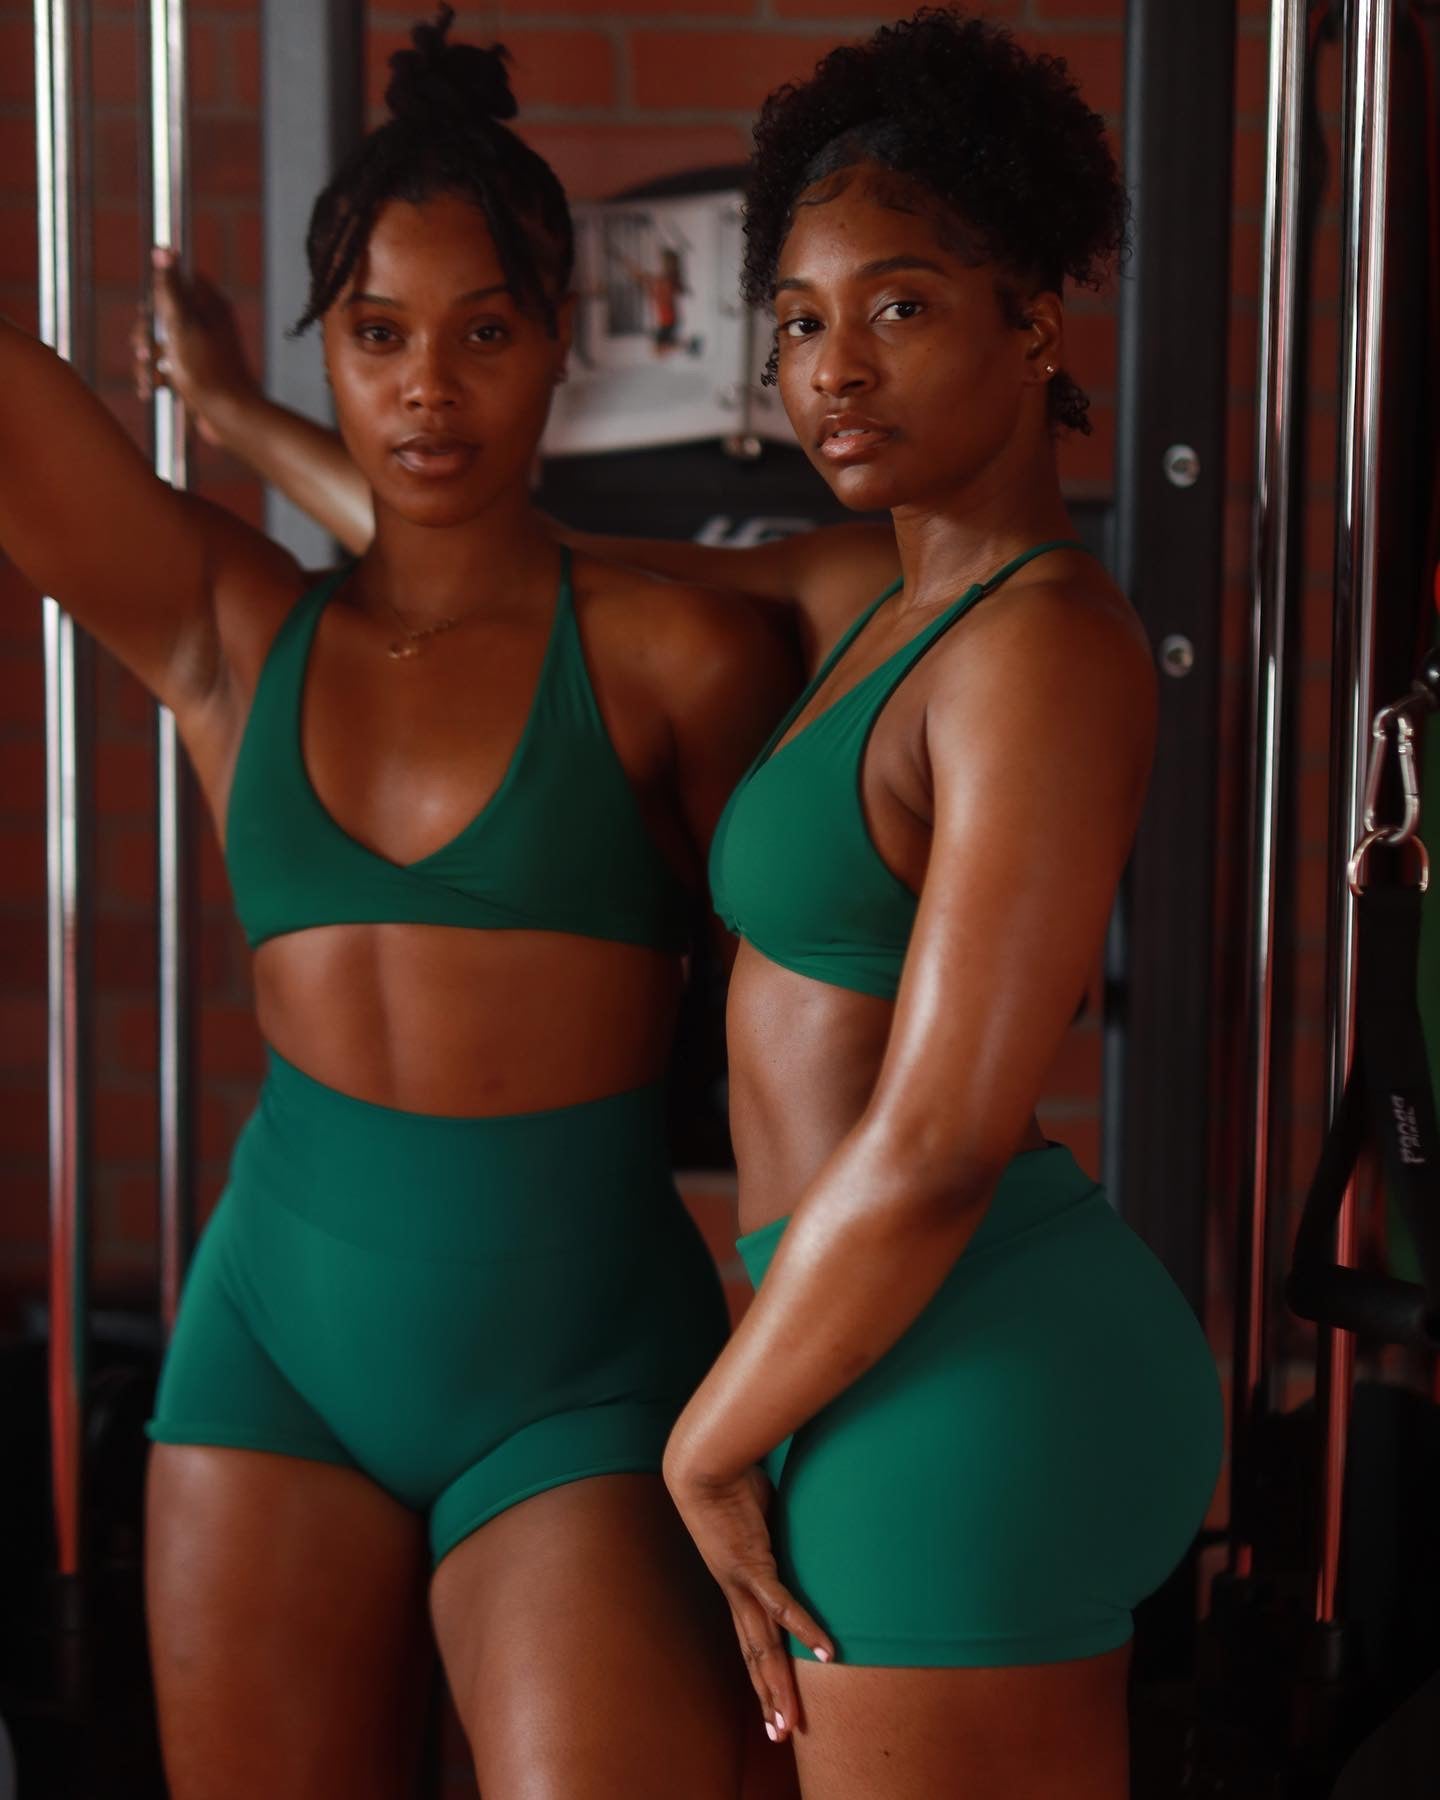 Buy AUROLA Intensify Workout Shorts Sets for Women Seamless